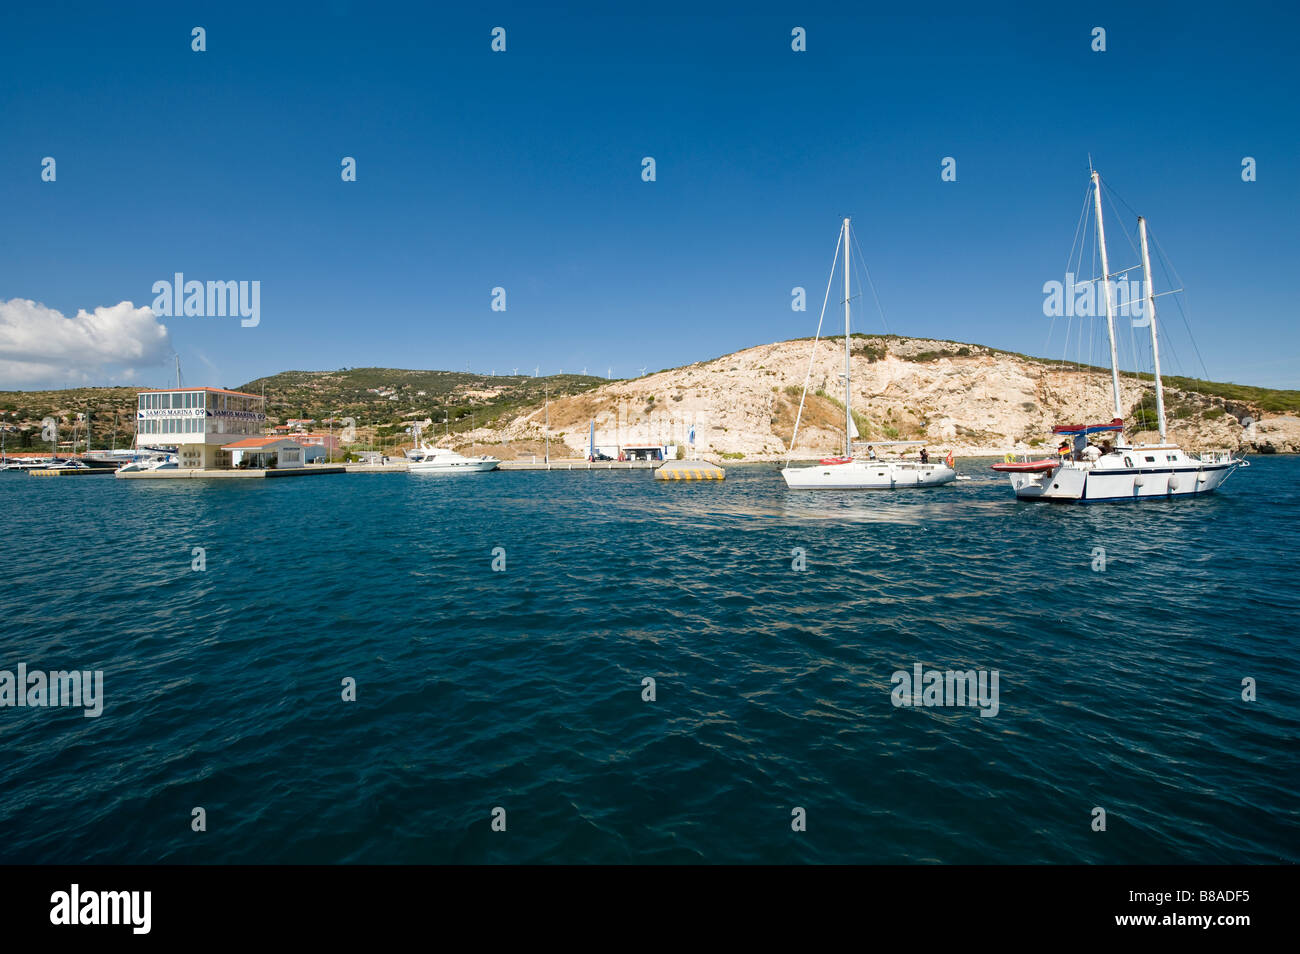 Boats leaving a marina on a aegean island Stock Photo